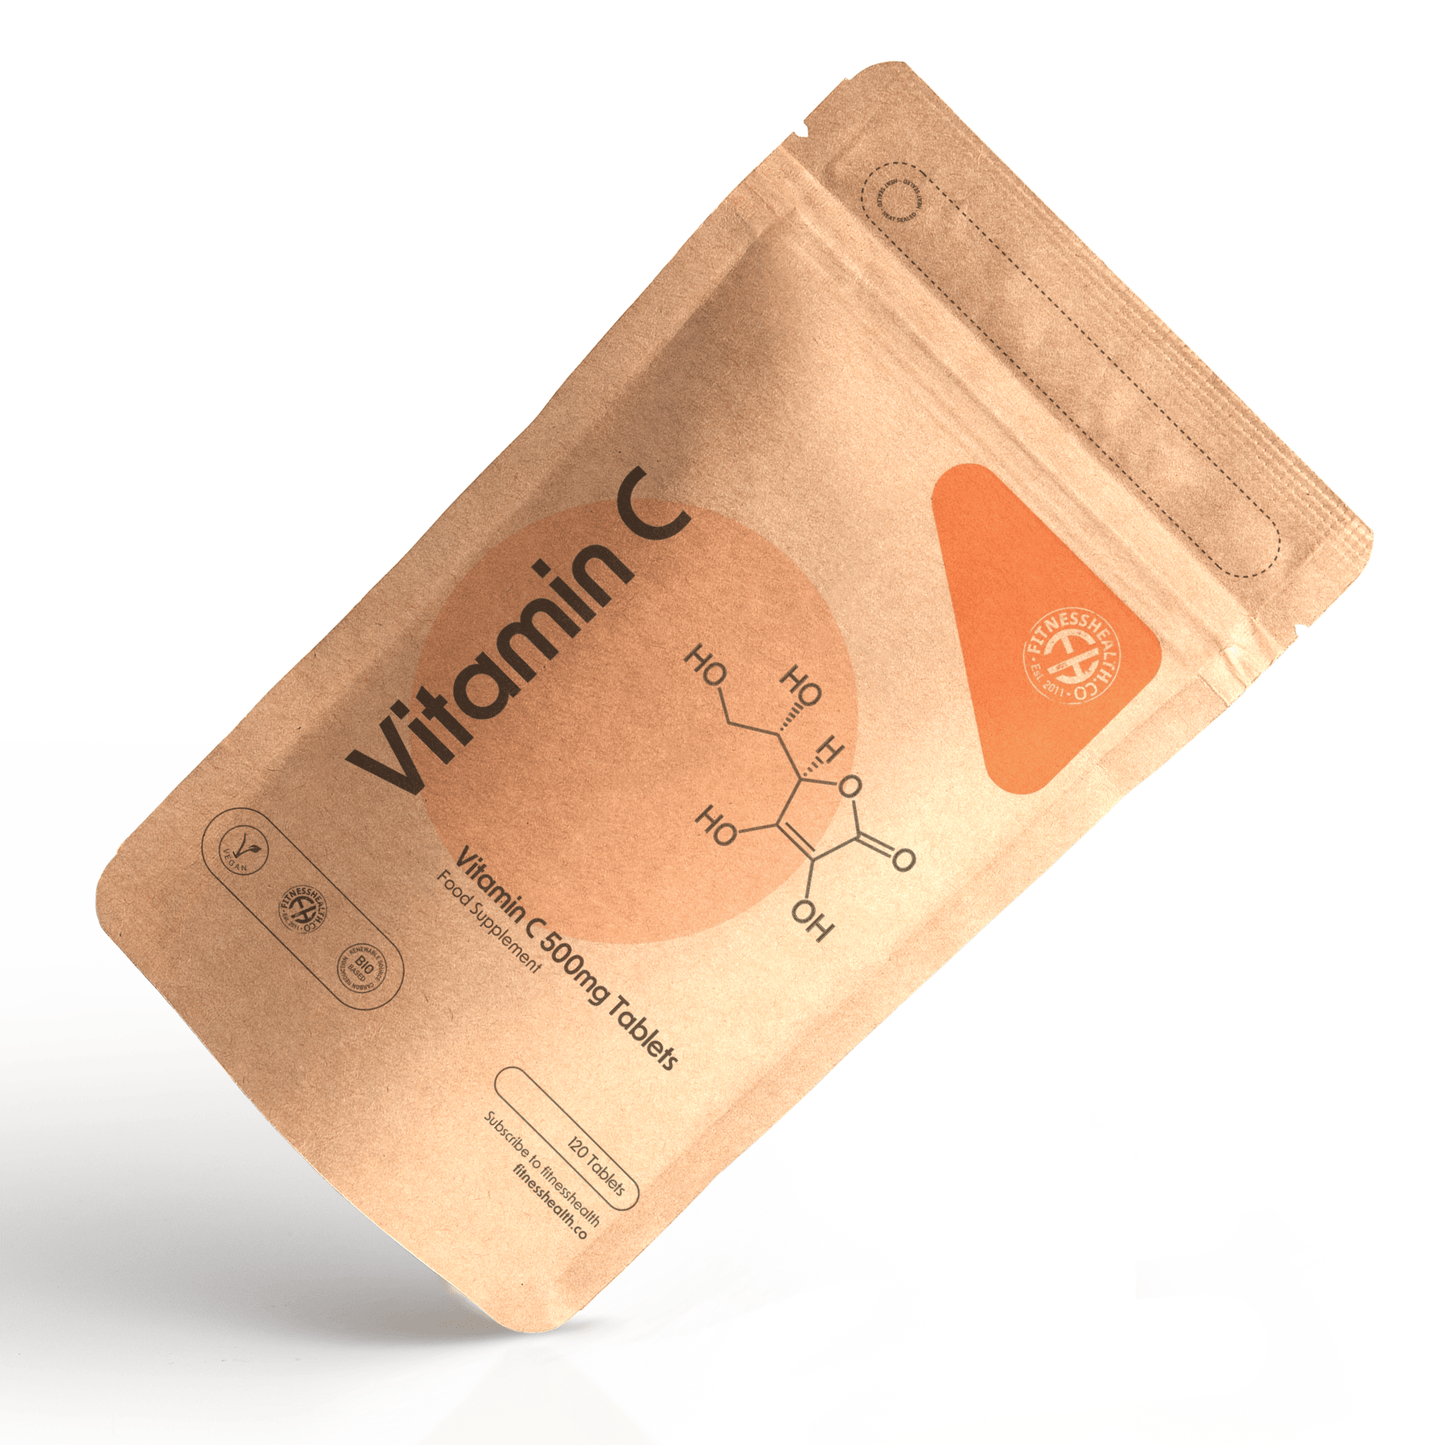 Vitamin C 500mg Tablets - Ascorbic Acid - Immune Support - Fitness Health 